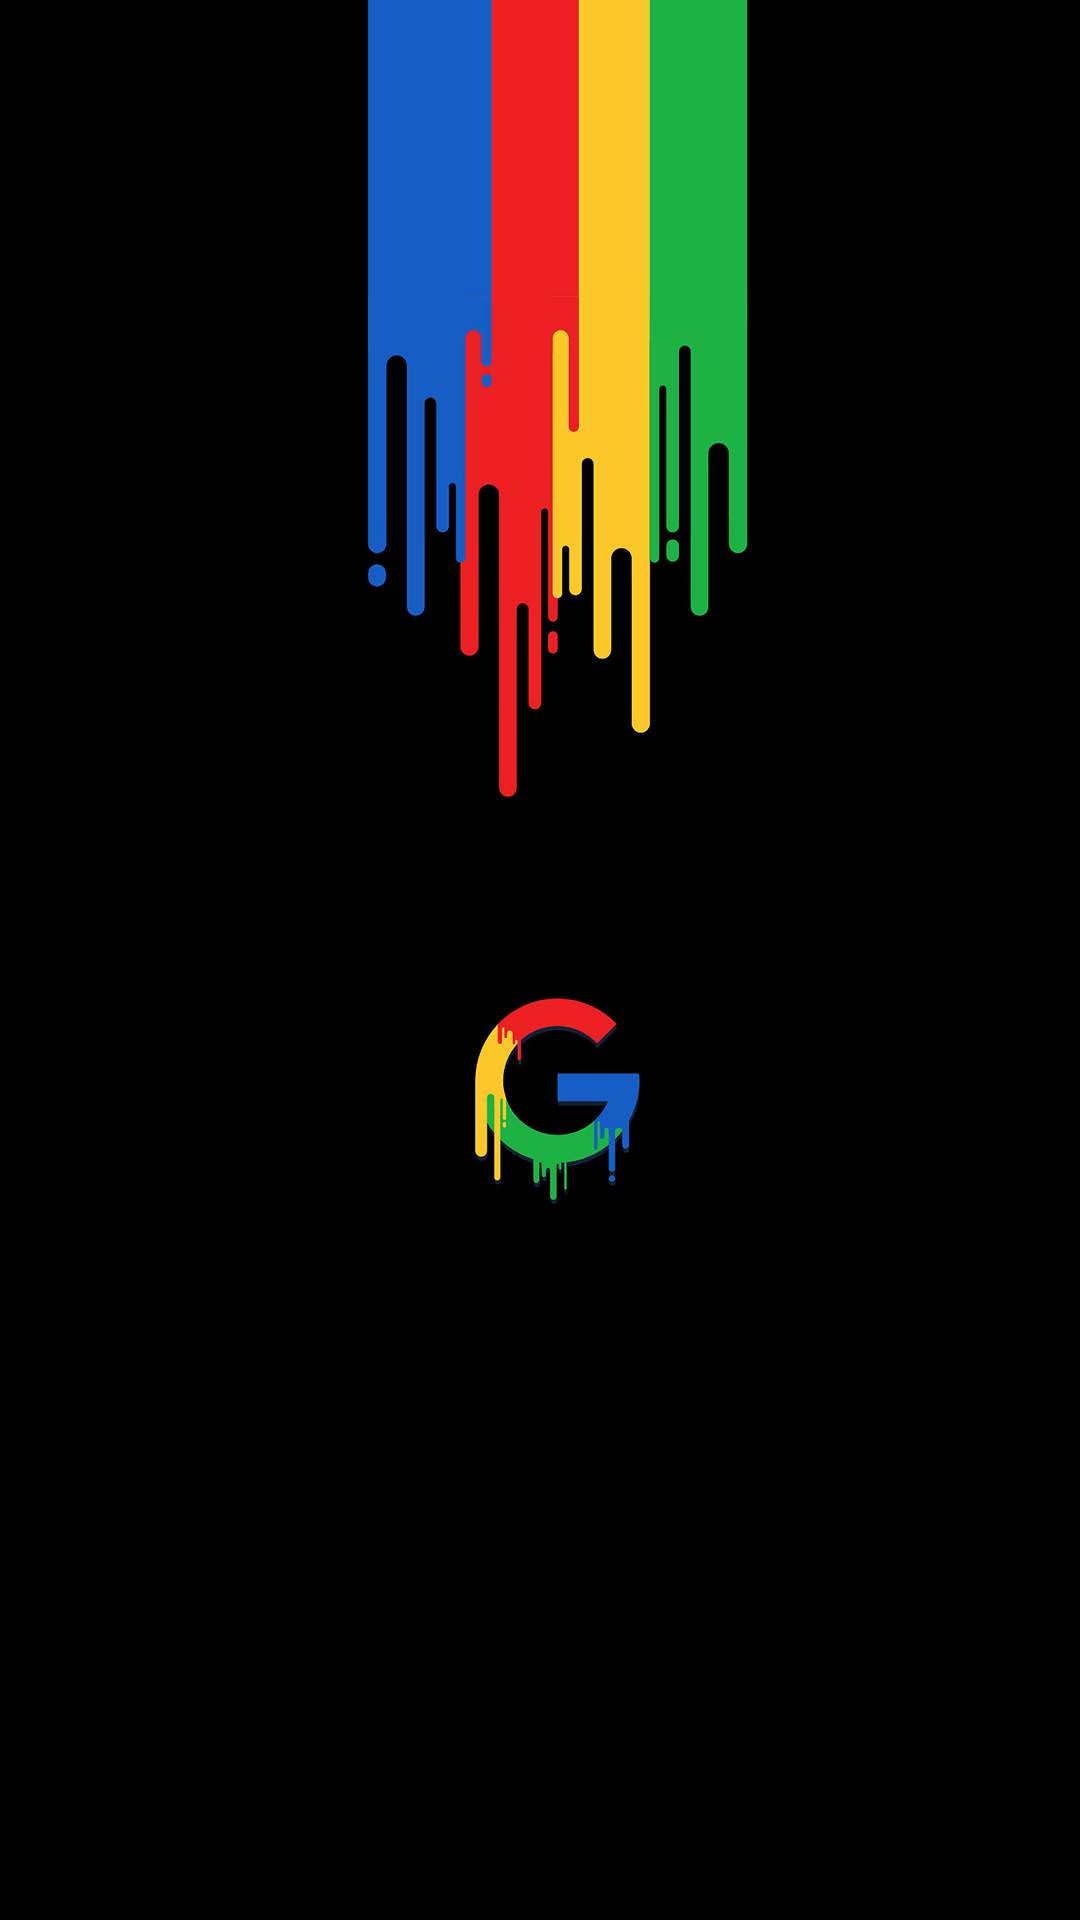 Google Pixel XL Wallpapers - Top Free Google Pixel XL ...